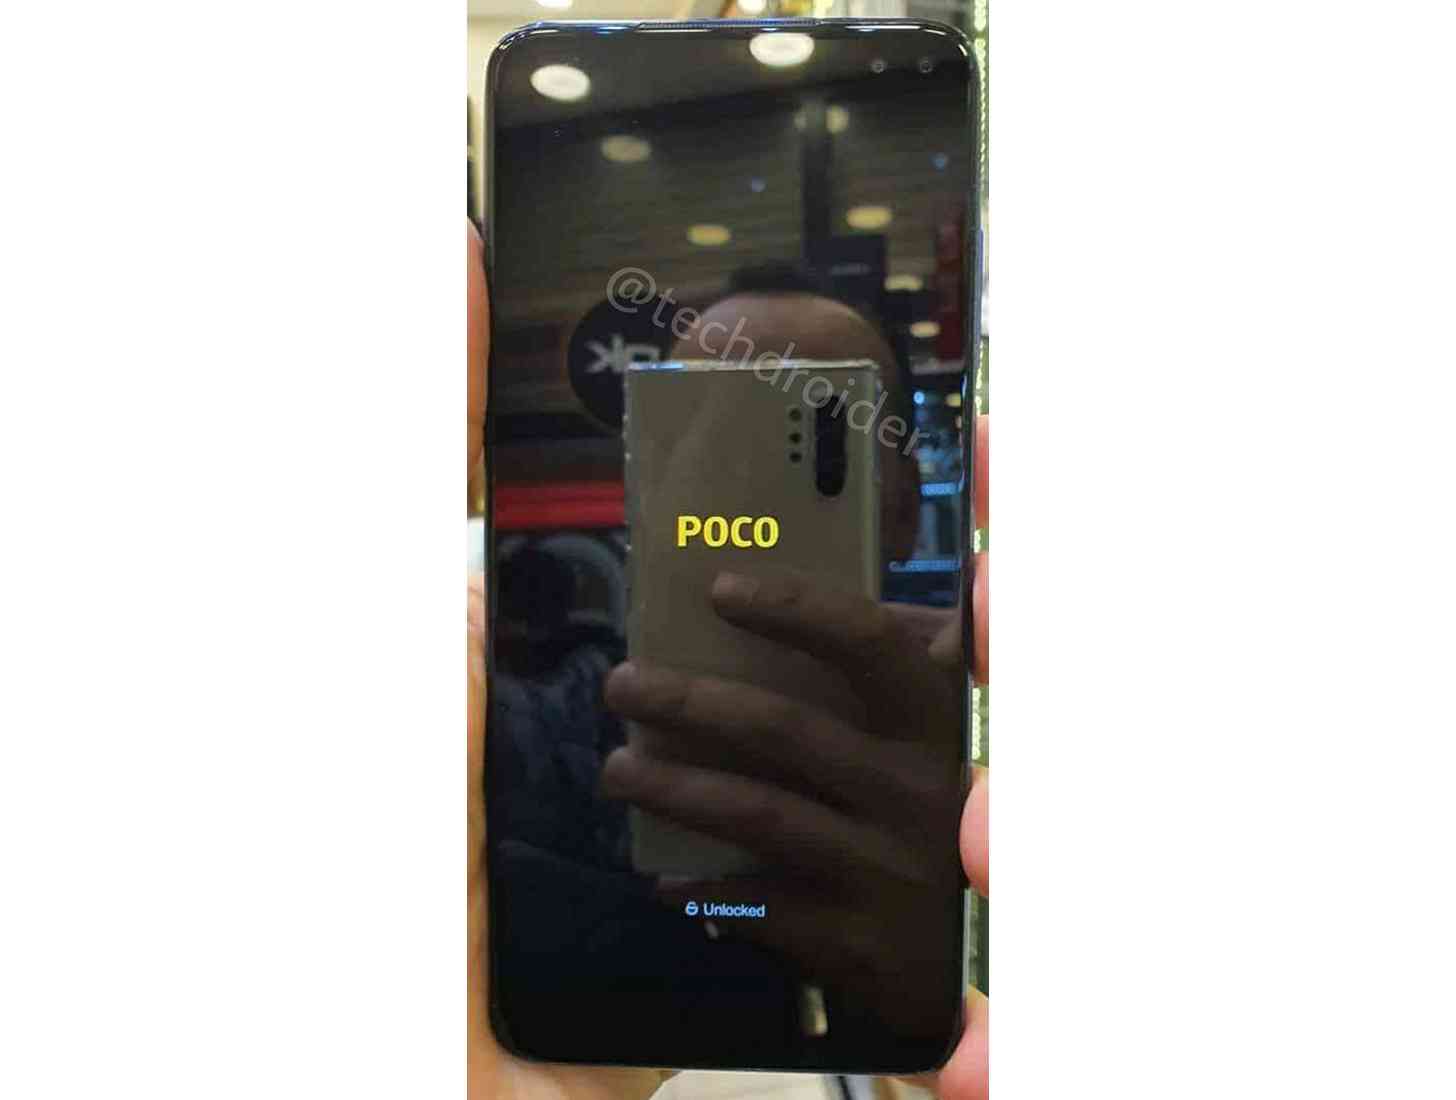 Poco X2 photo leak